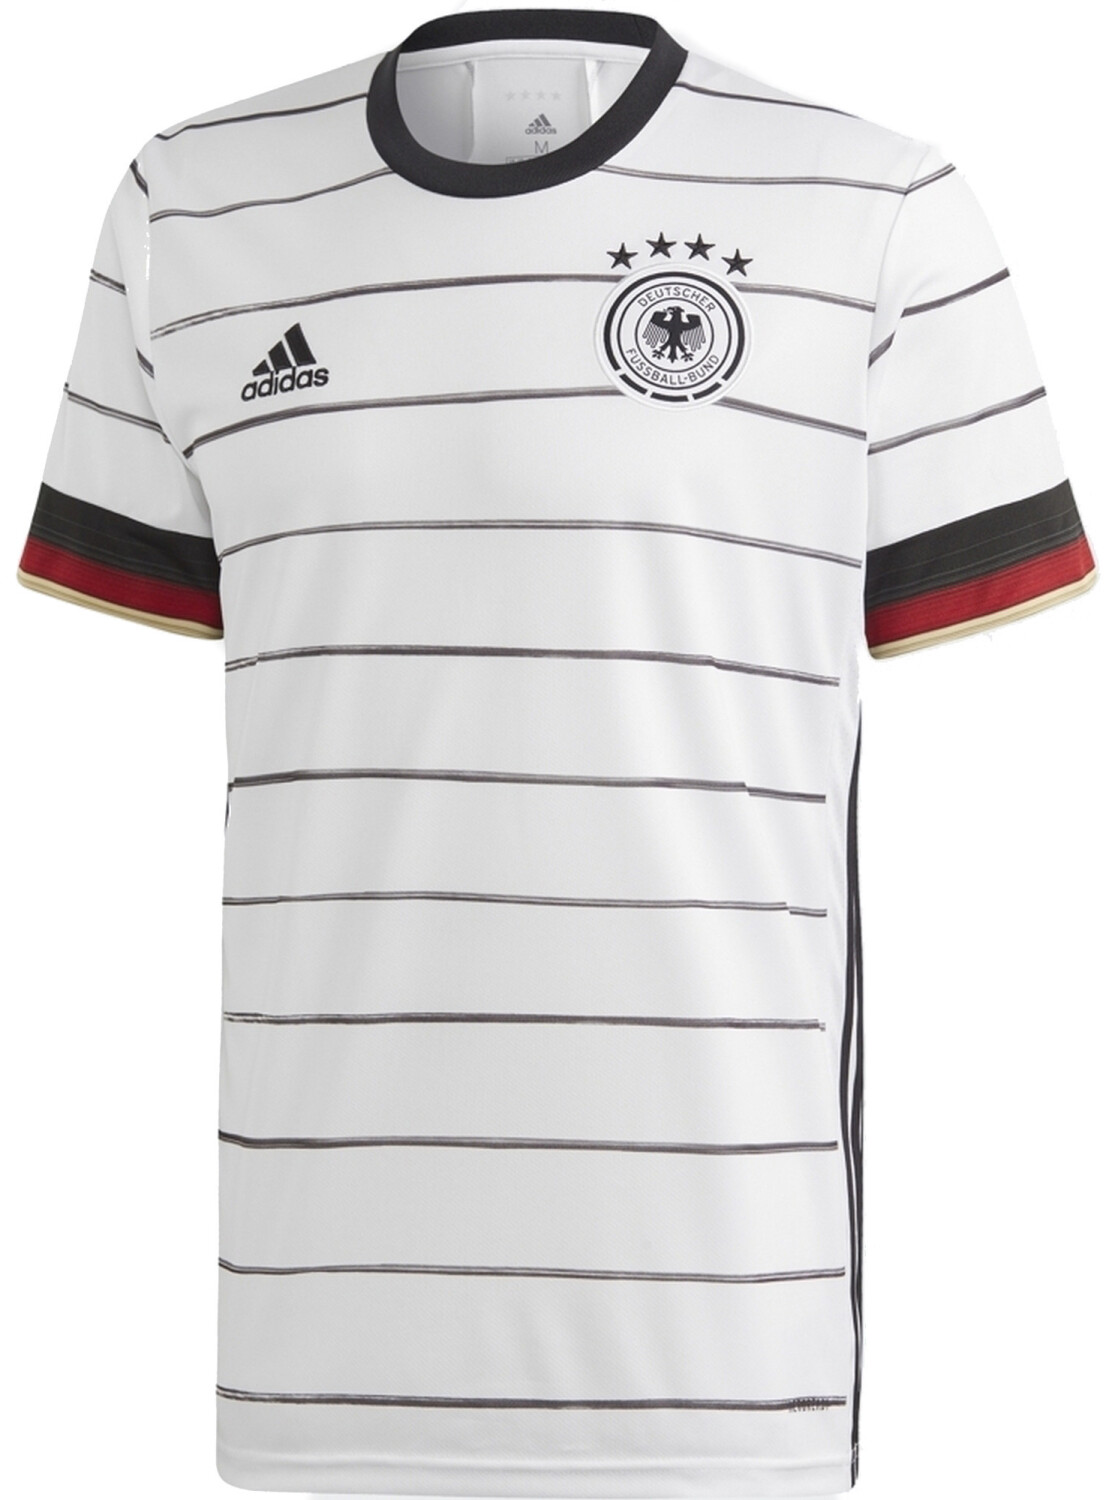 Adidas Germany Shirt 2020